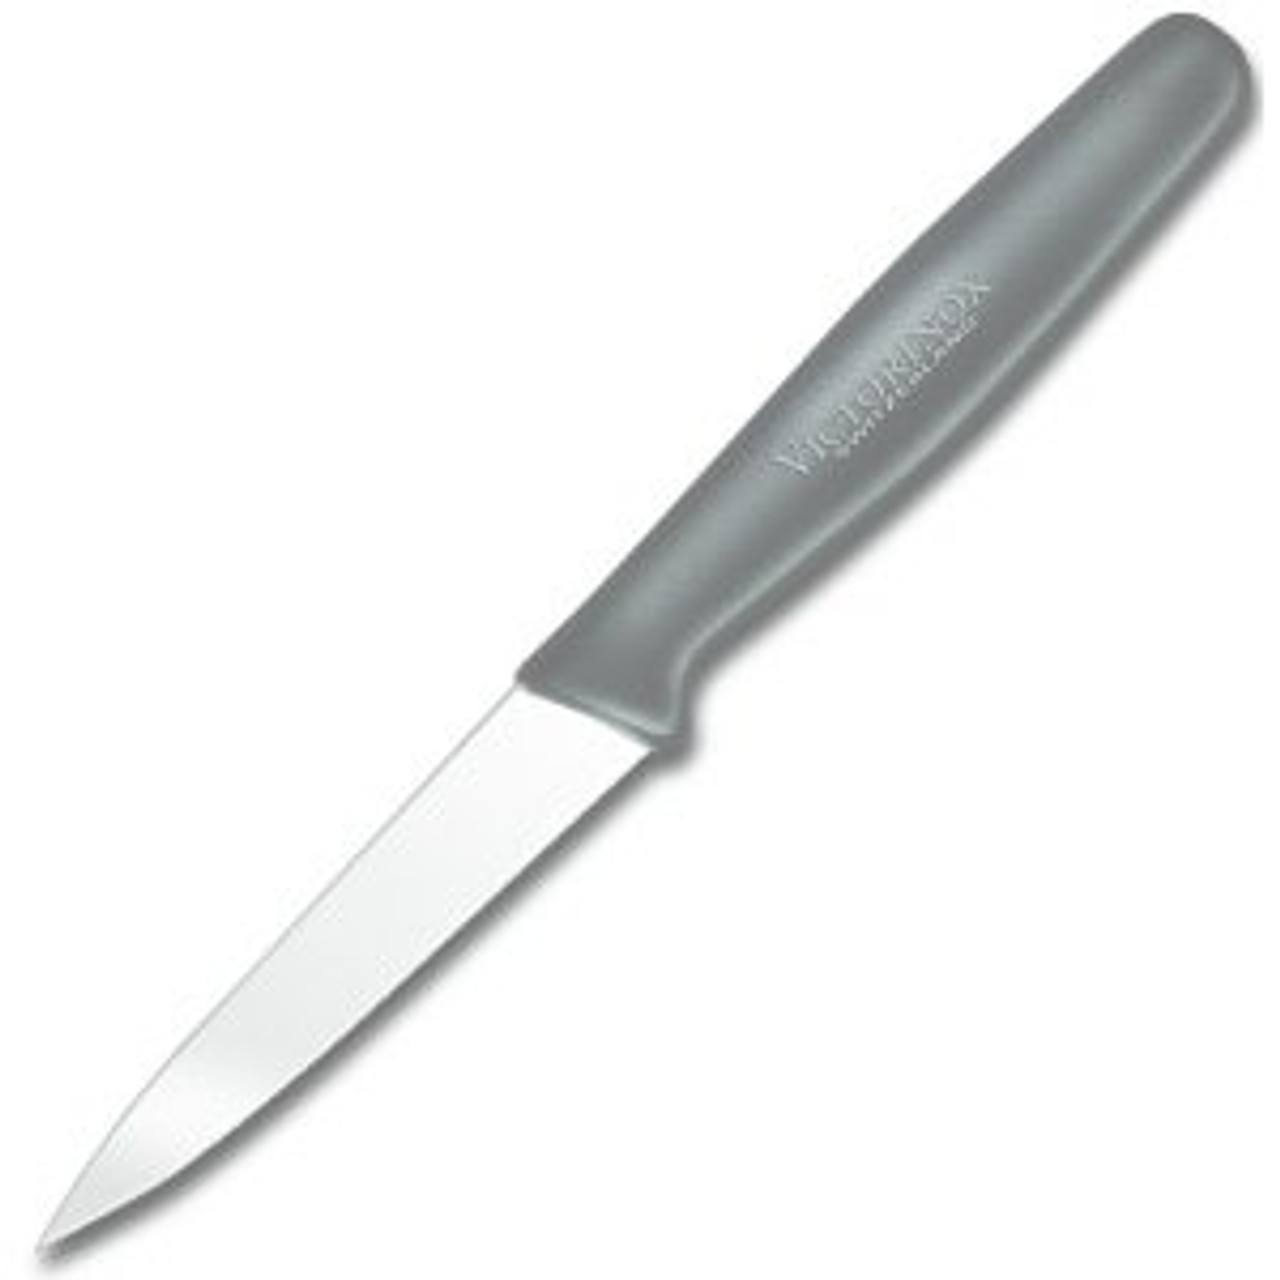 Forschner 3 1/4 in Paring Knife, Black Nylon handle